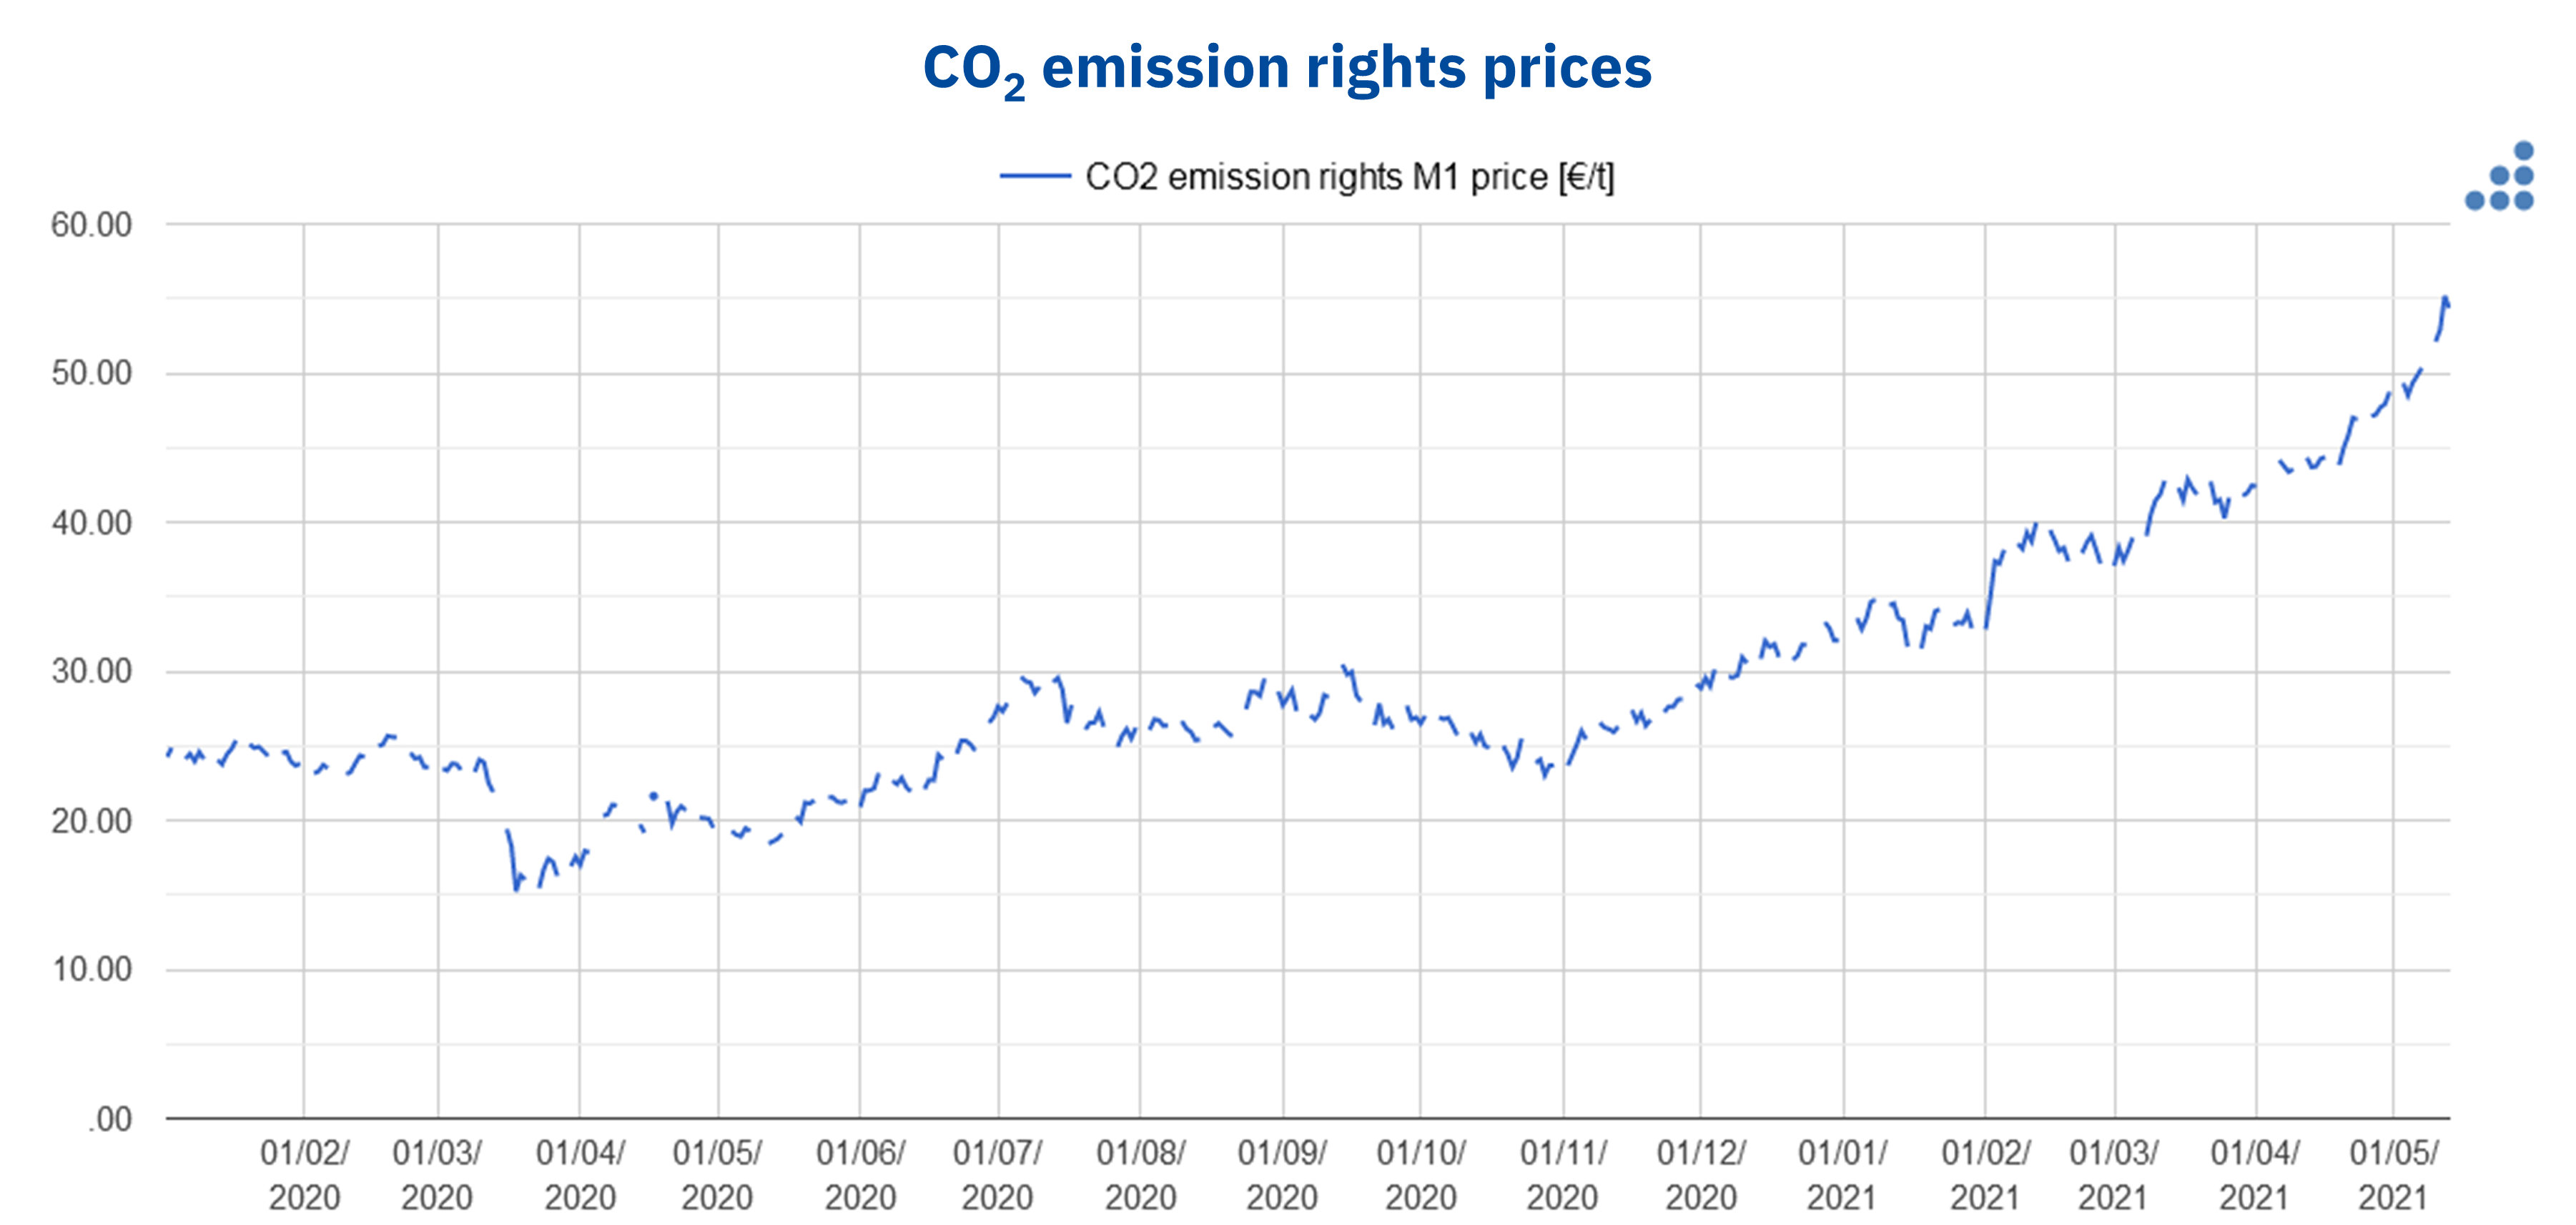 AleaSoft - CO2 EUA emission rights prices